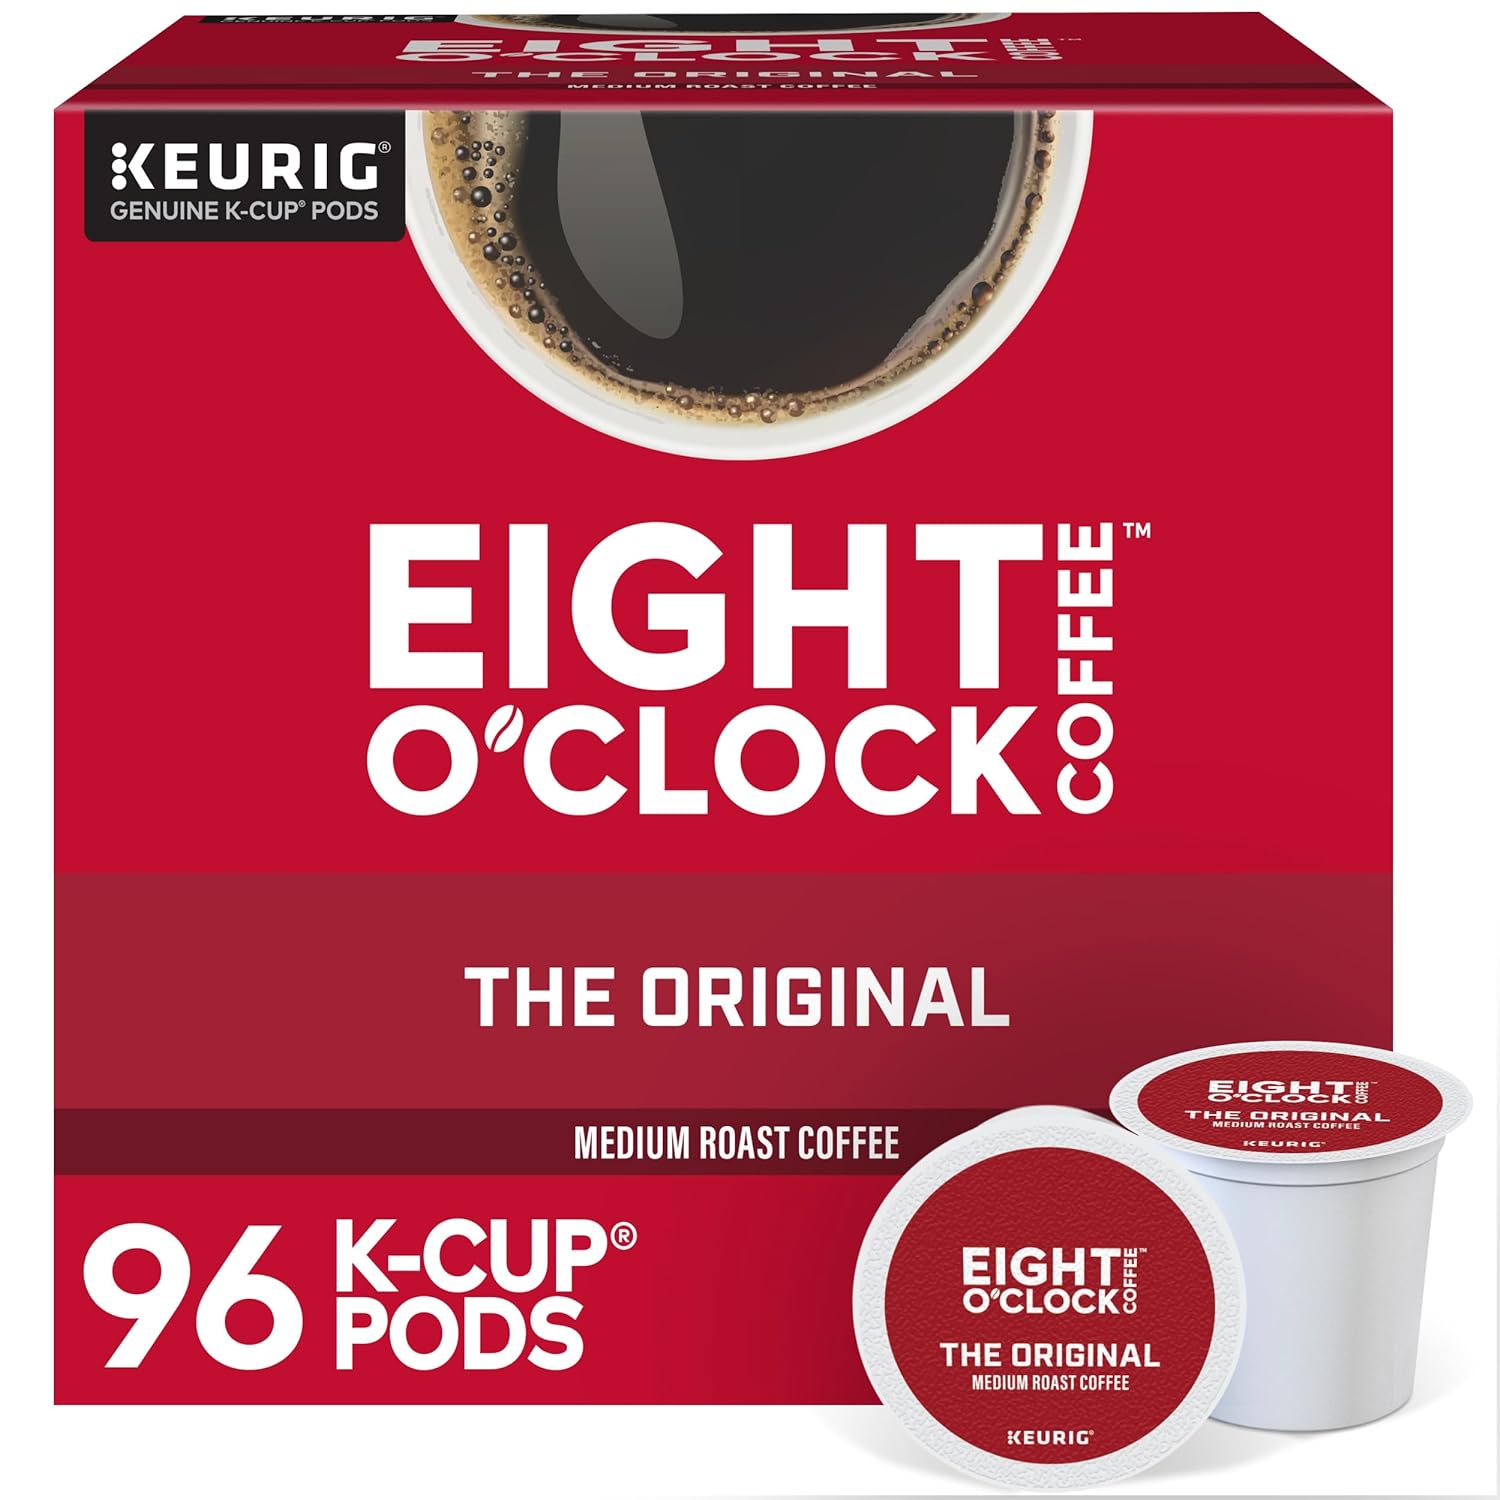 Eight OClock Coffee The Original Keurig Single-Serve K-Cup Pods, Medium Roast Coffee, 96 Count (4 Packs of 24)